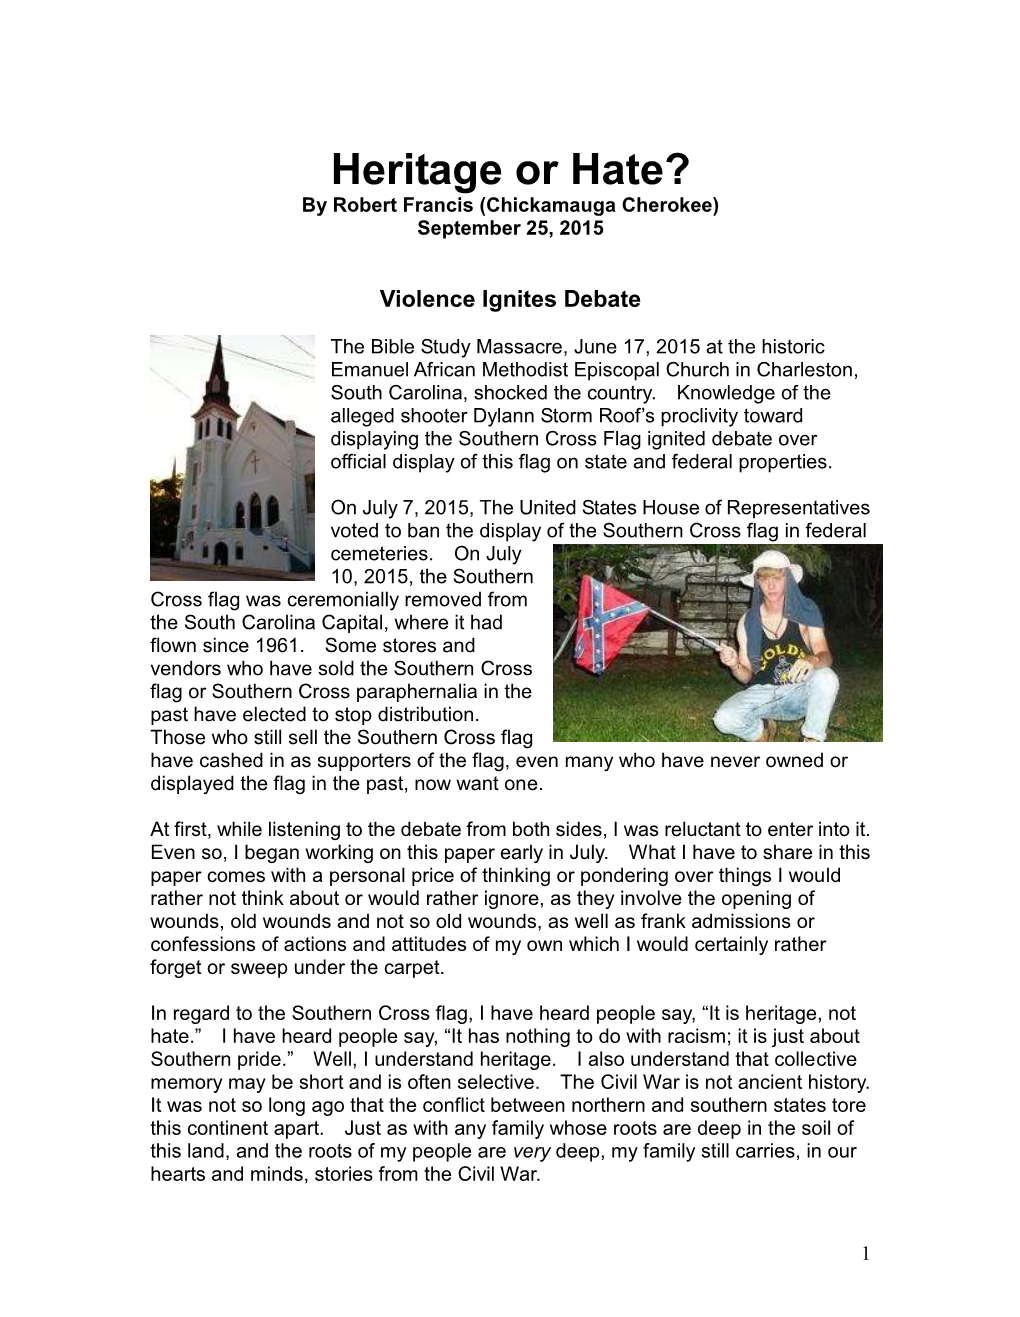 Heritage Or Hate? by Robert Francis (Chickamauga Cherokee) September 25, 2015